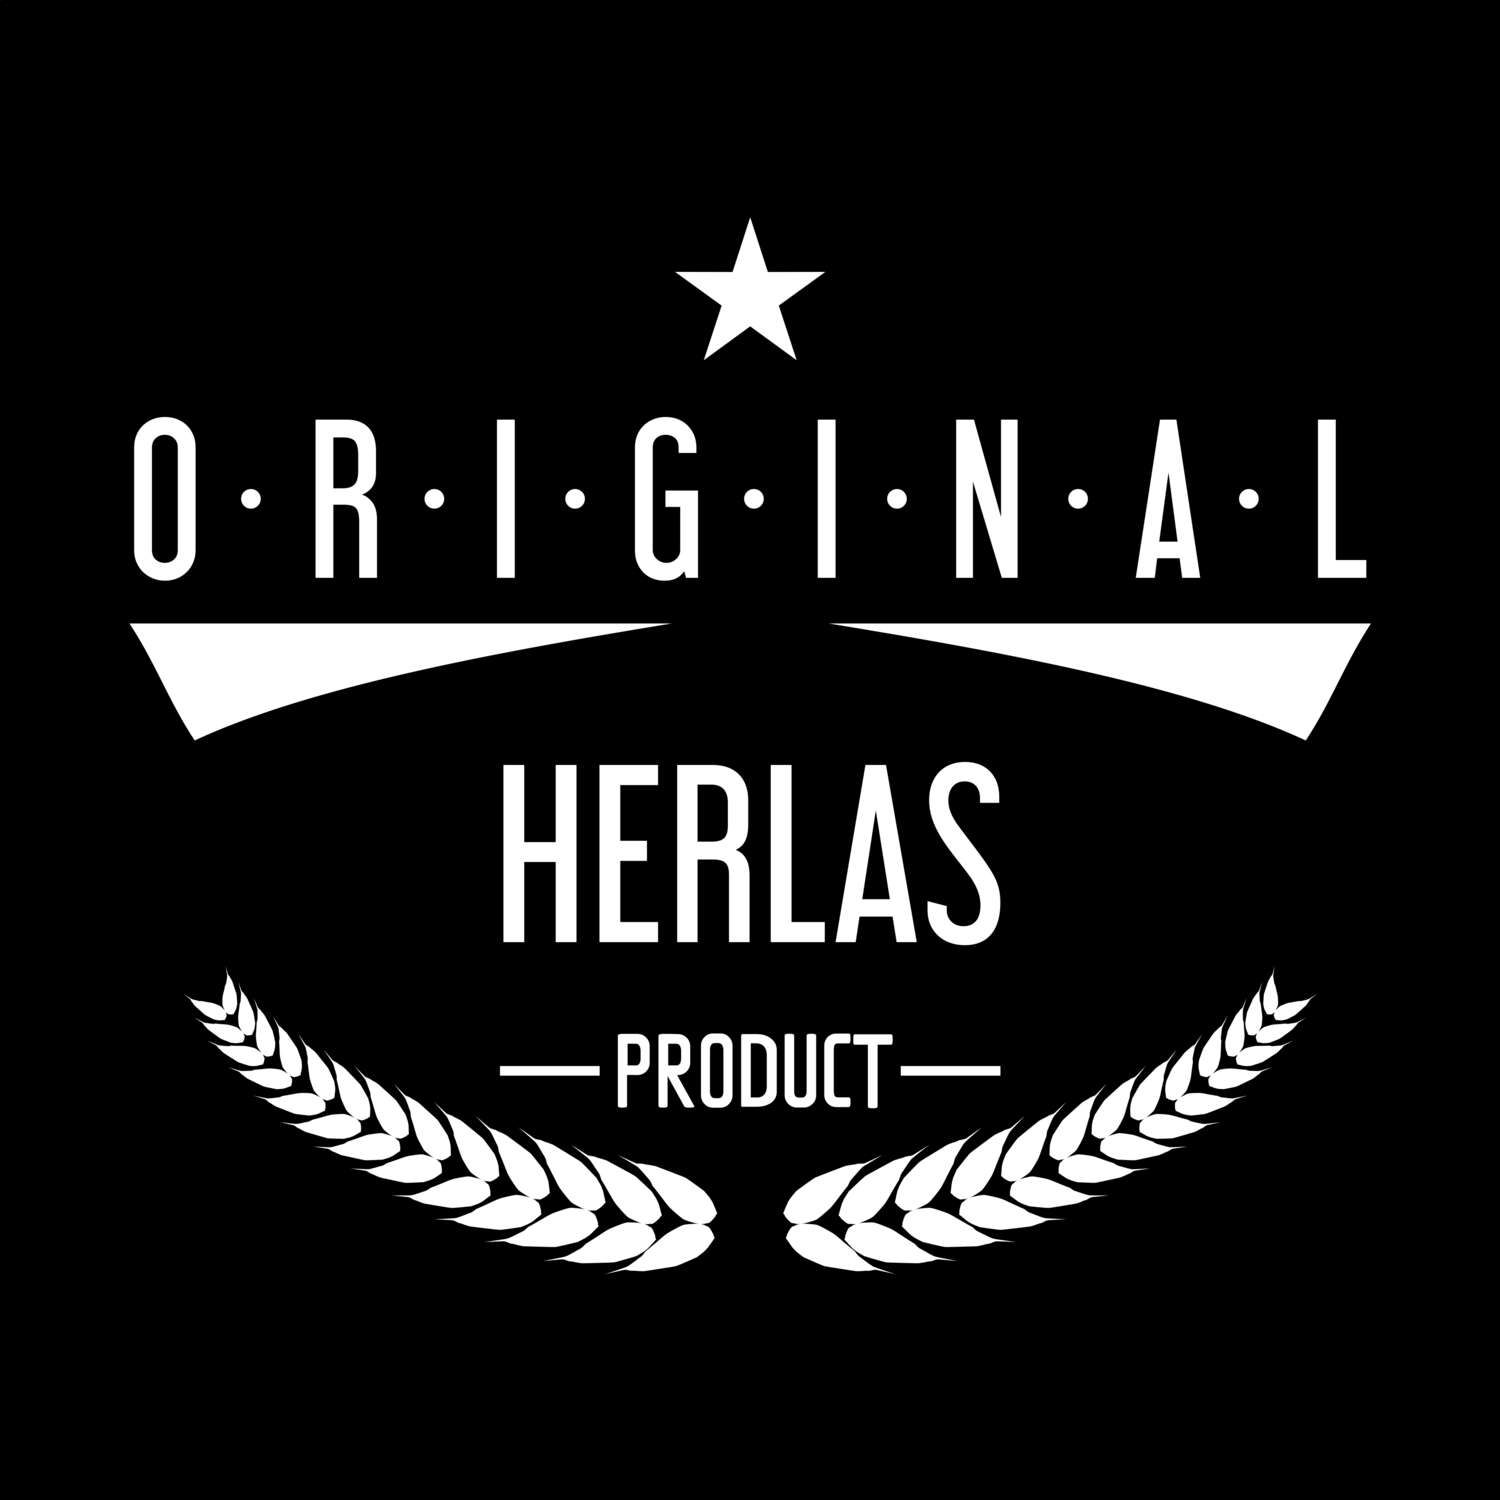 Herlas T-Shirt »Original Product«